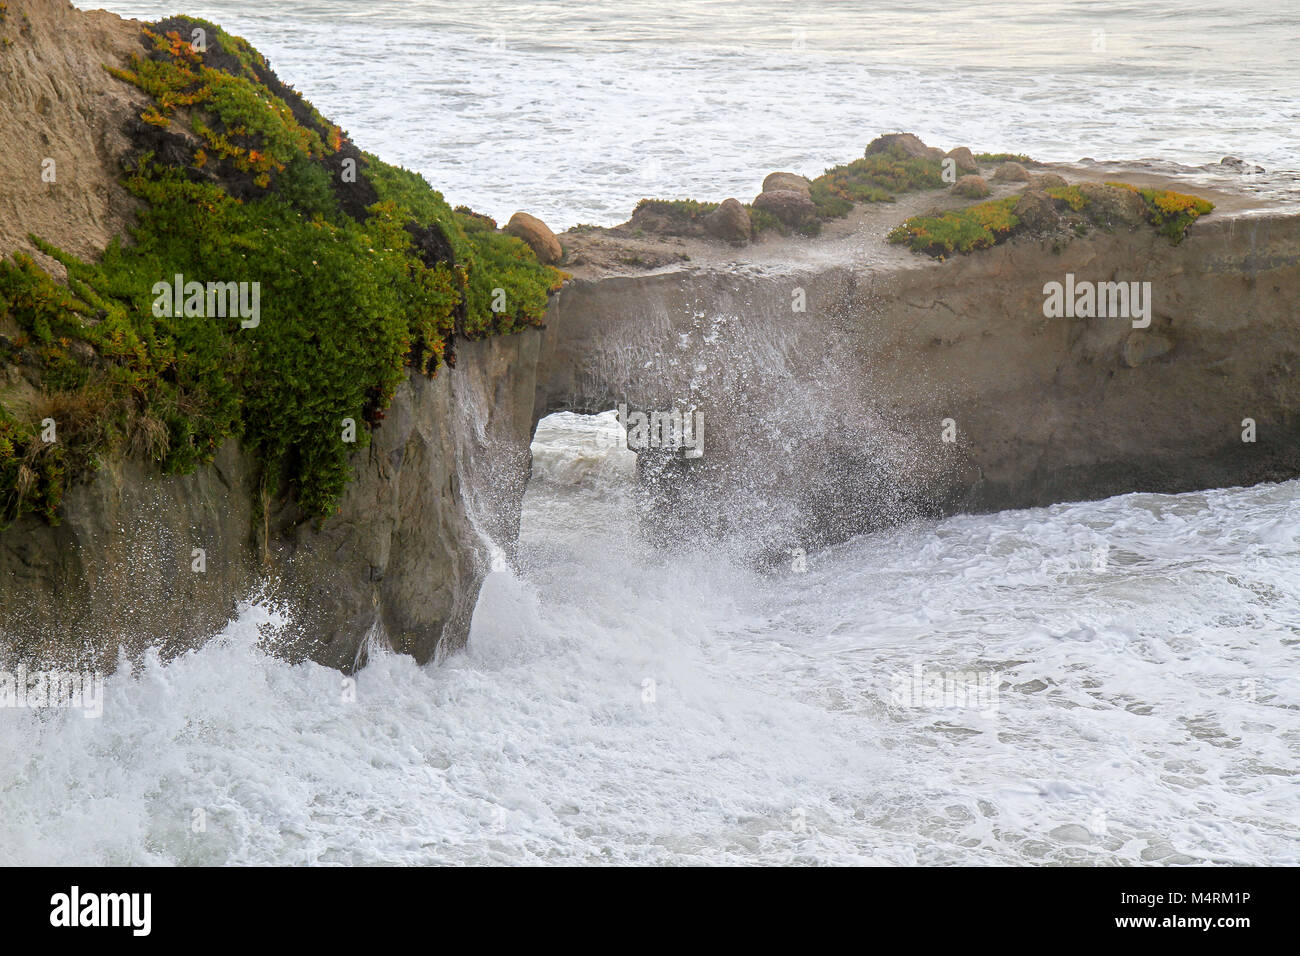 Waves break against cliffs, Santa Cruz, California, United States Stock Photo